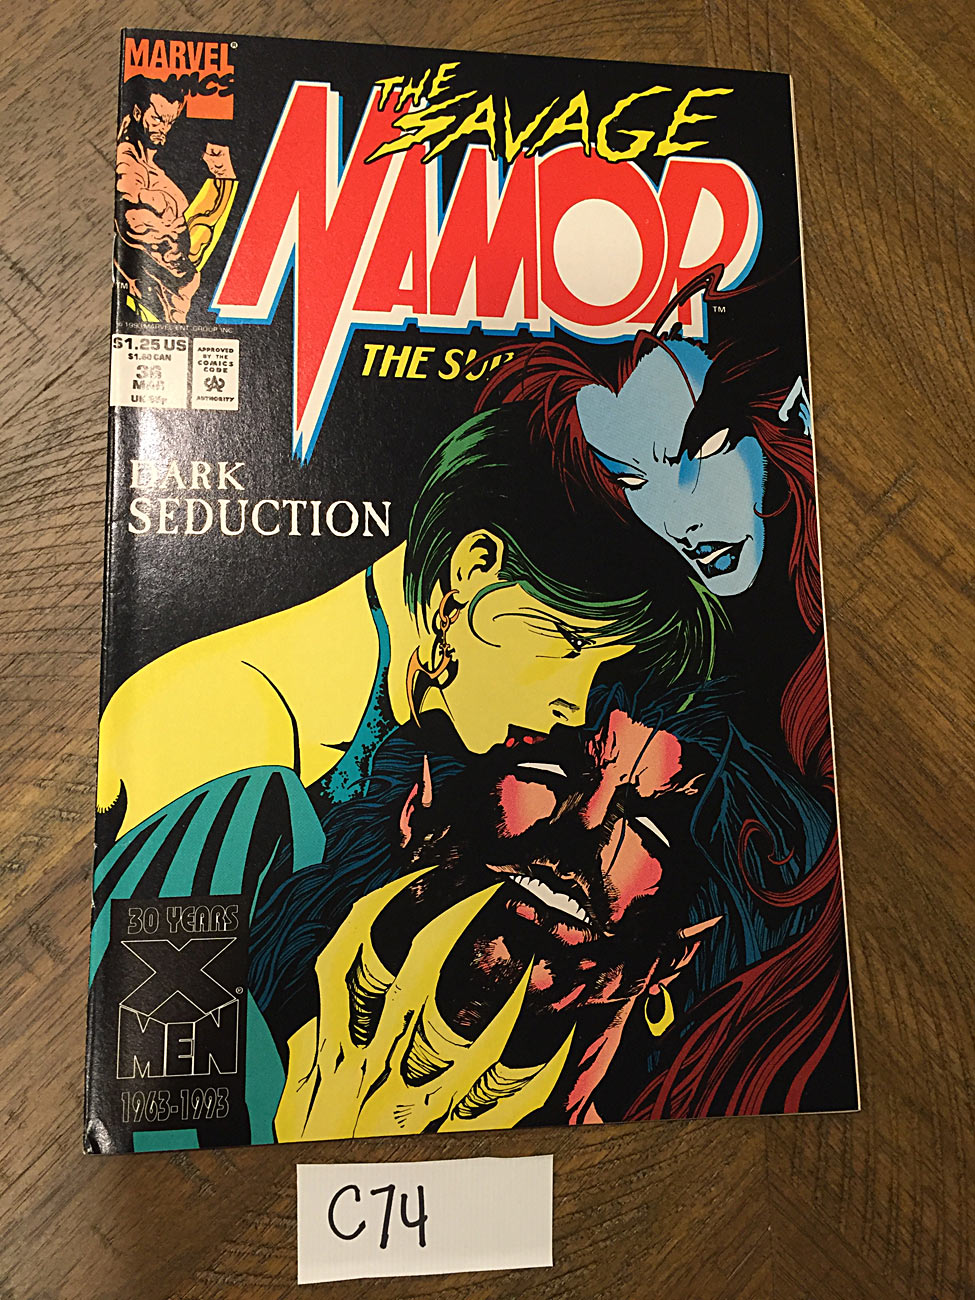 The Savage Namor Sub-Mariner (Vol. 1, No. 36, March 1993) [C74]